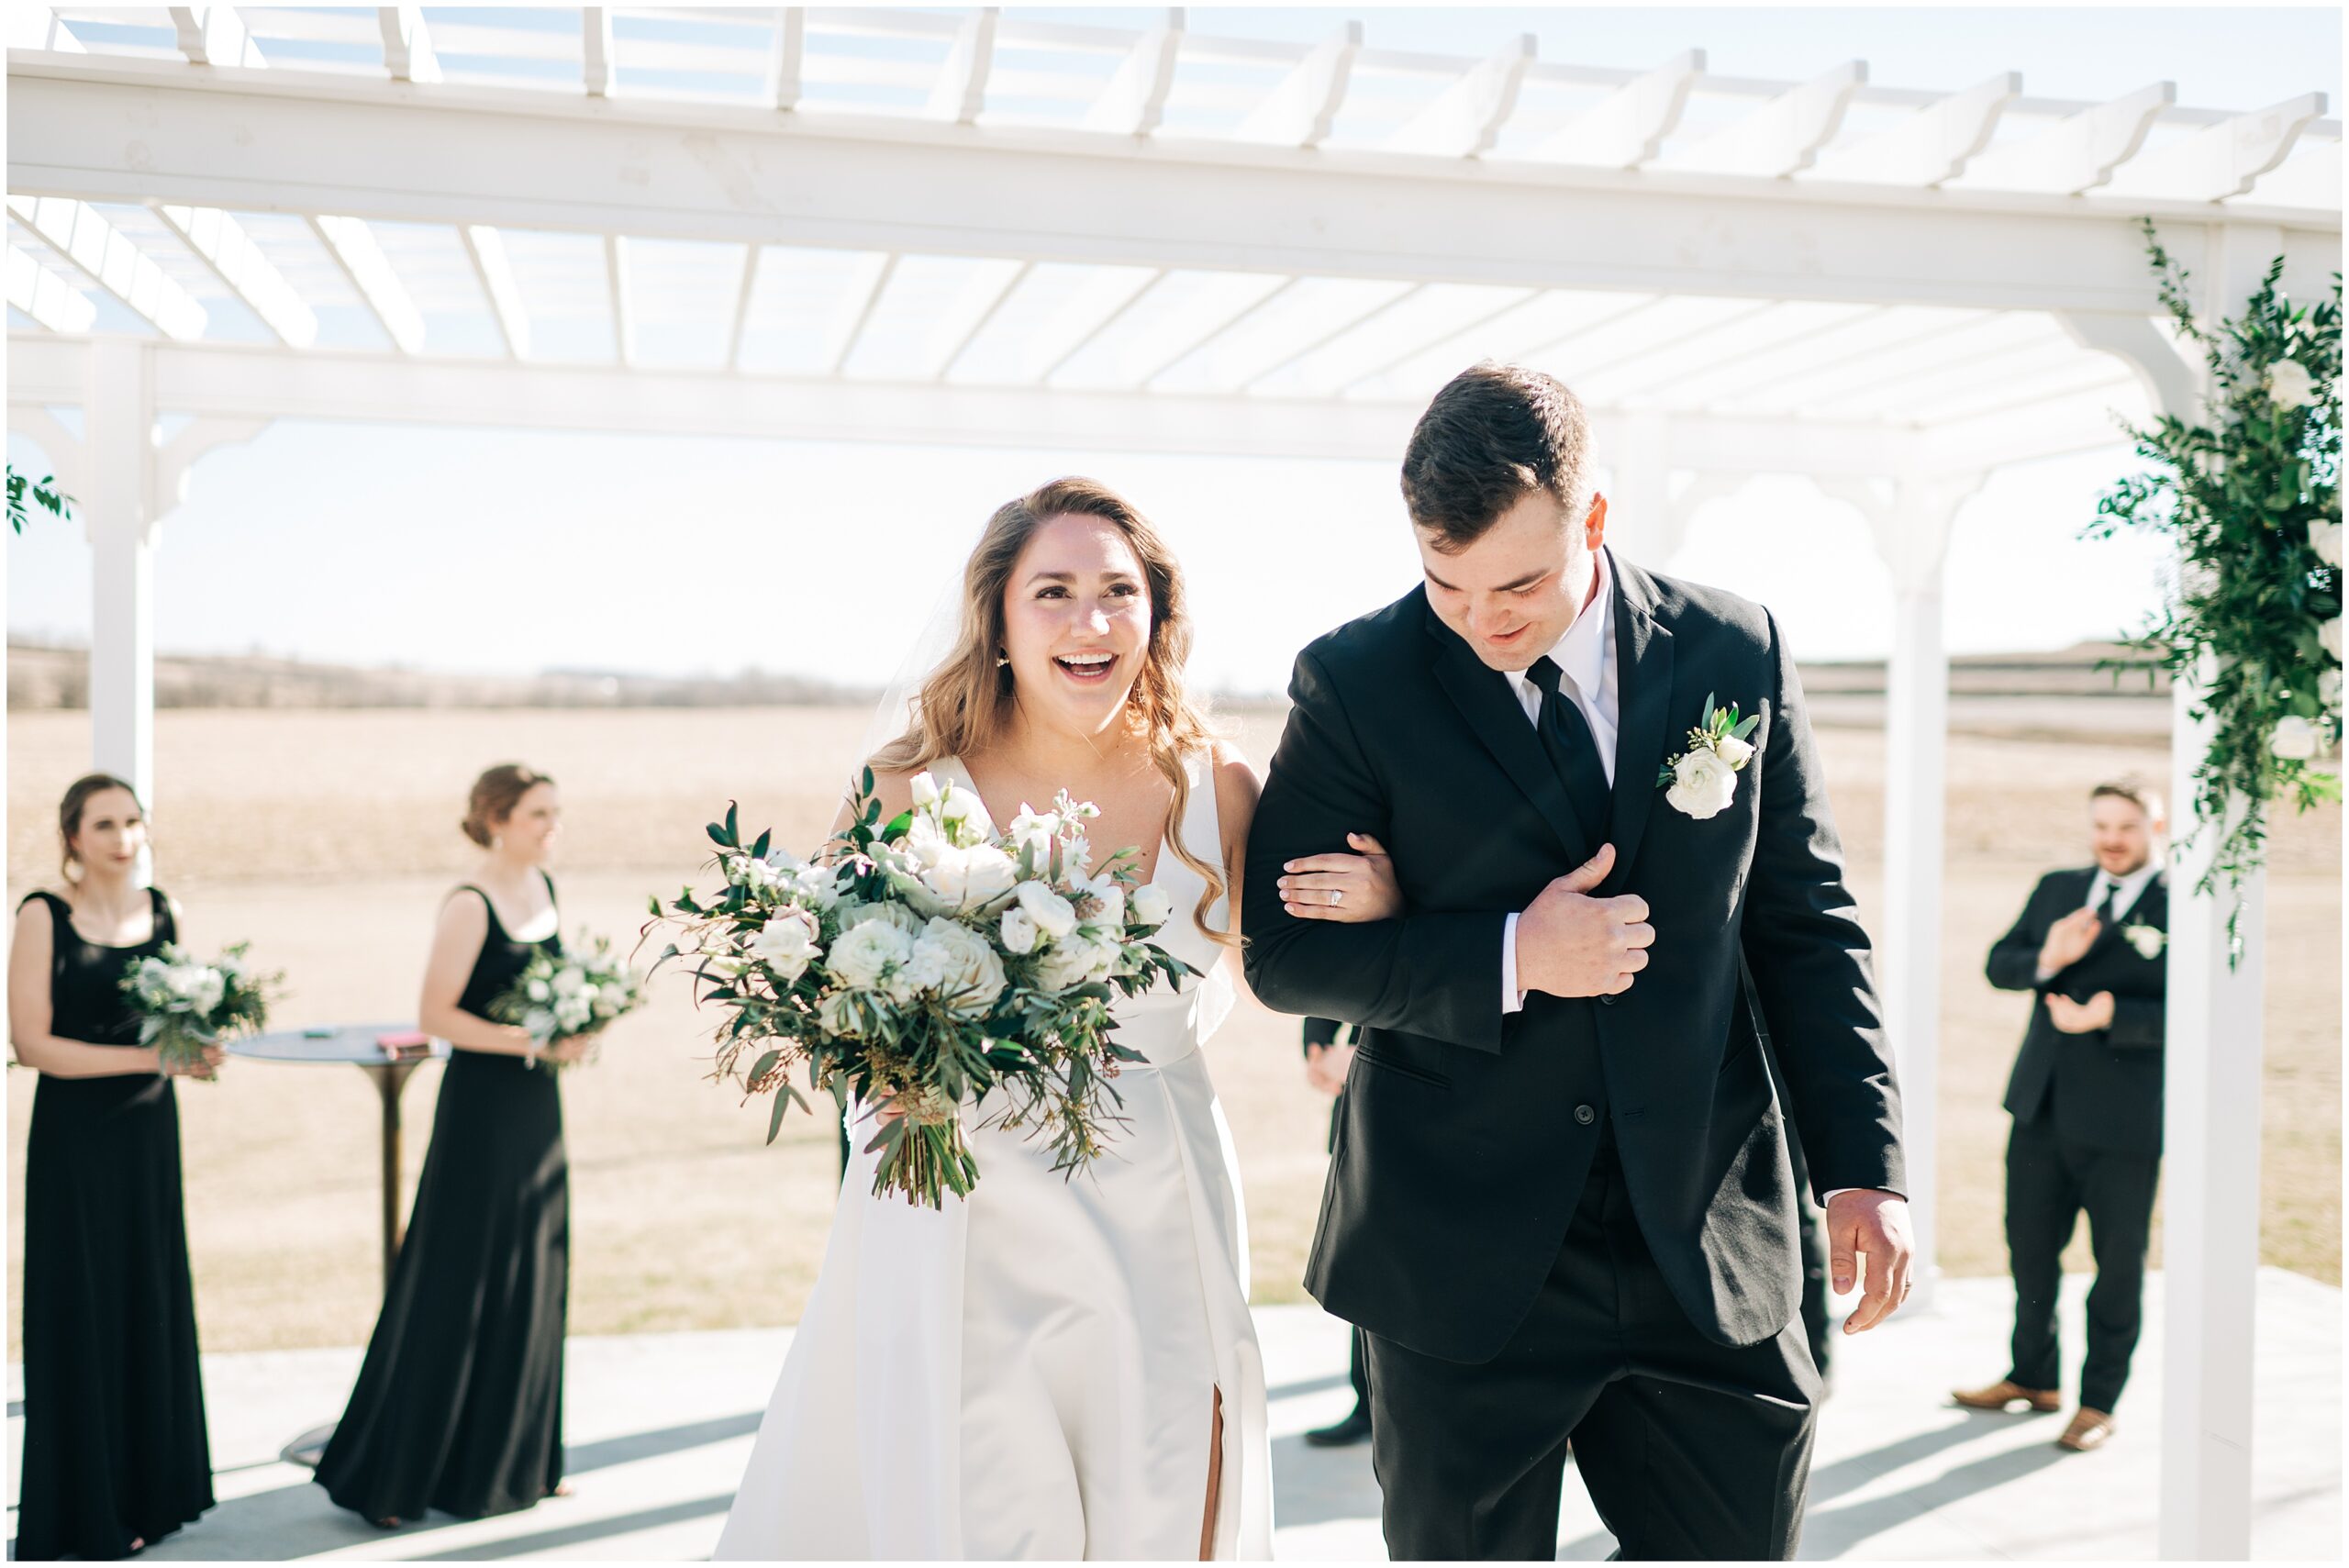 Bride and Groom walk arm in arm back down the aisle at the Palace Barn in Treynor Iowa. Photo by Anna Brace, an Omaha NE Wedding Photographer.